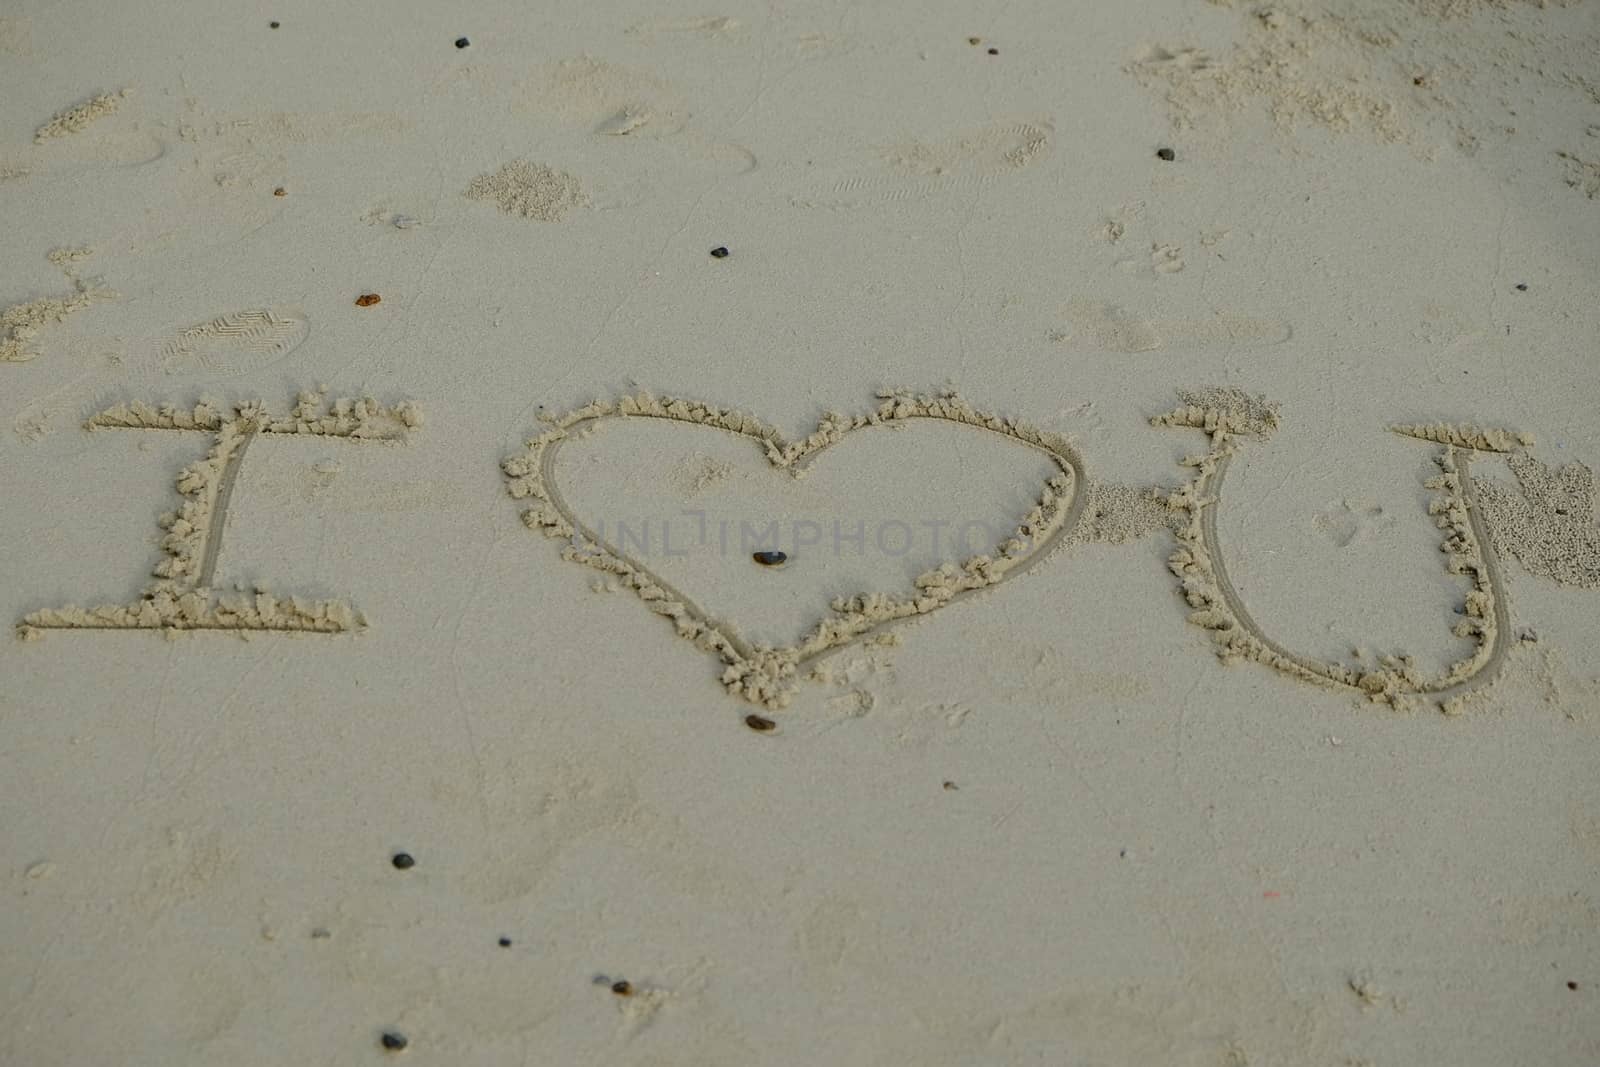 Word "I Love You" on sandy beach